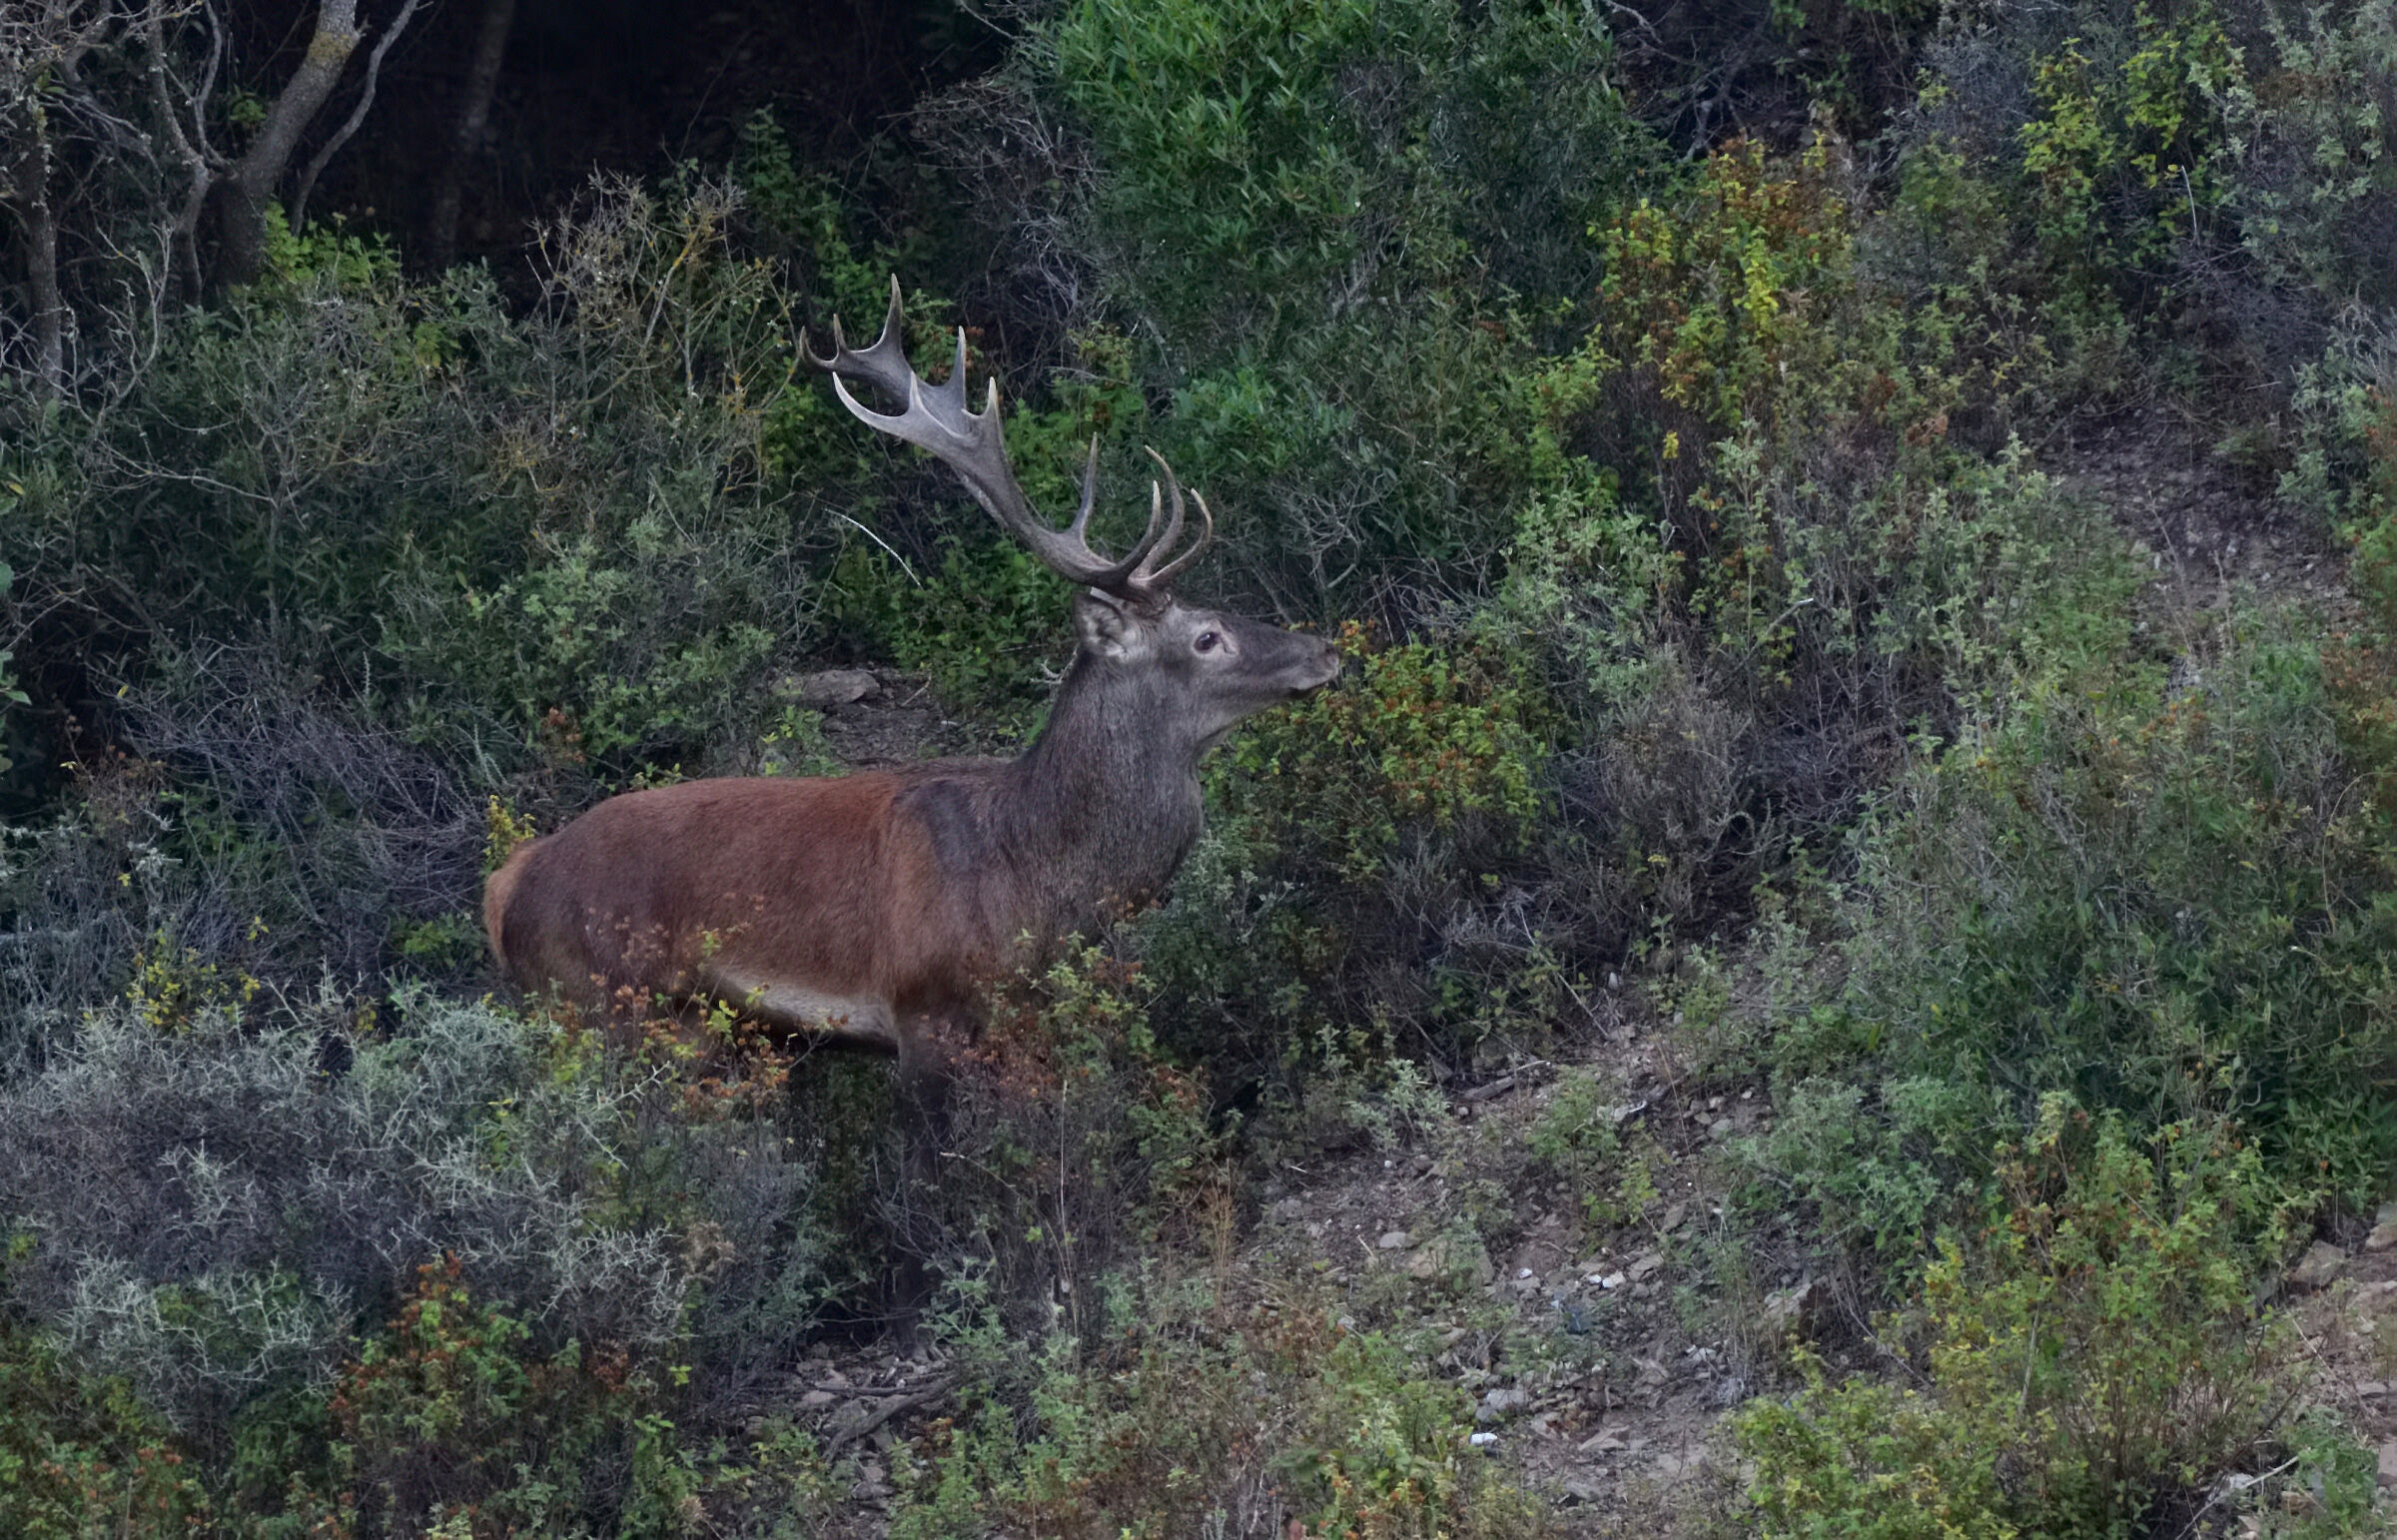 The season of the roars of the Sardinian deer starts...